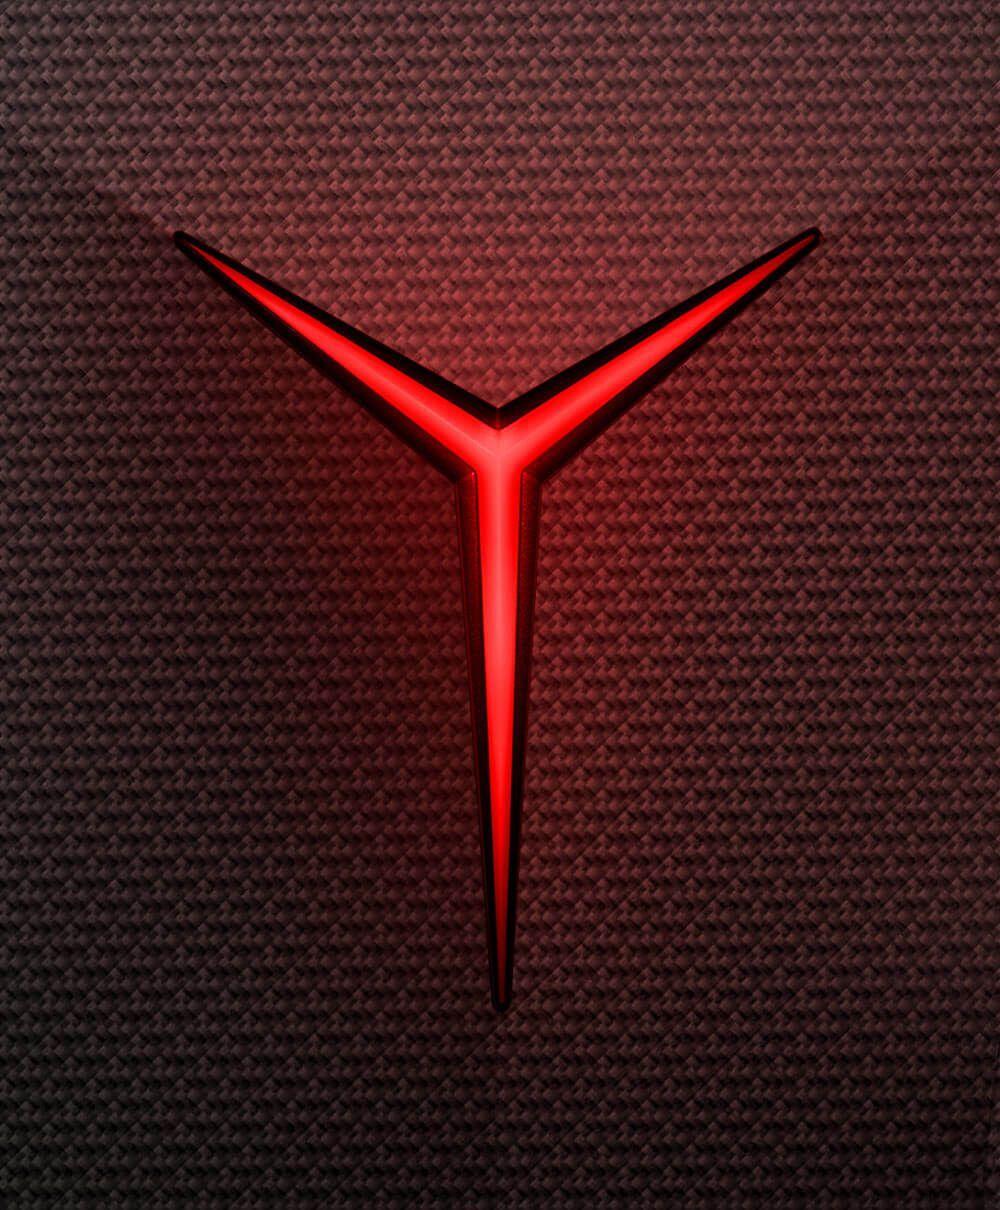 Red Lenovo Logo - Y series gaming red wallpaper?. Lenovo alternate logo for gaming